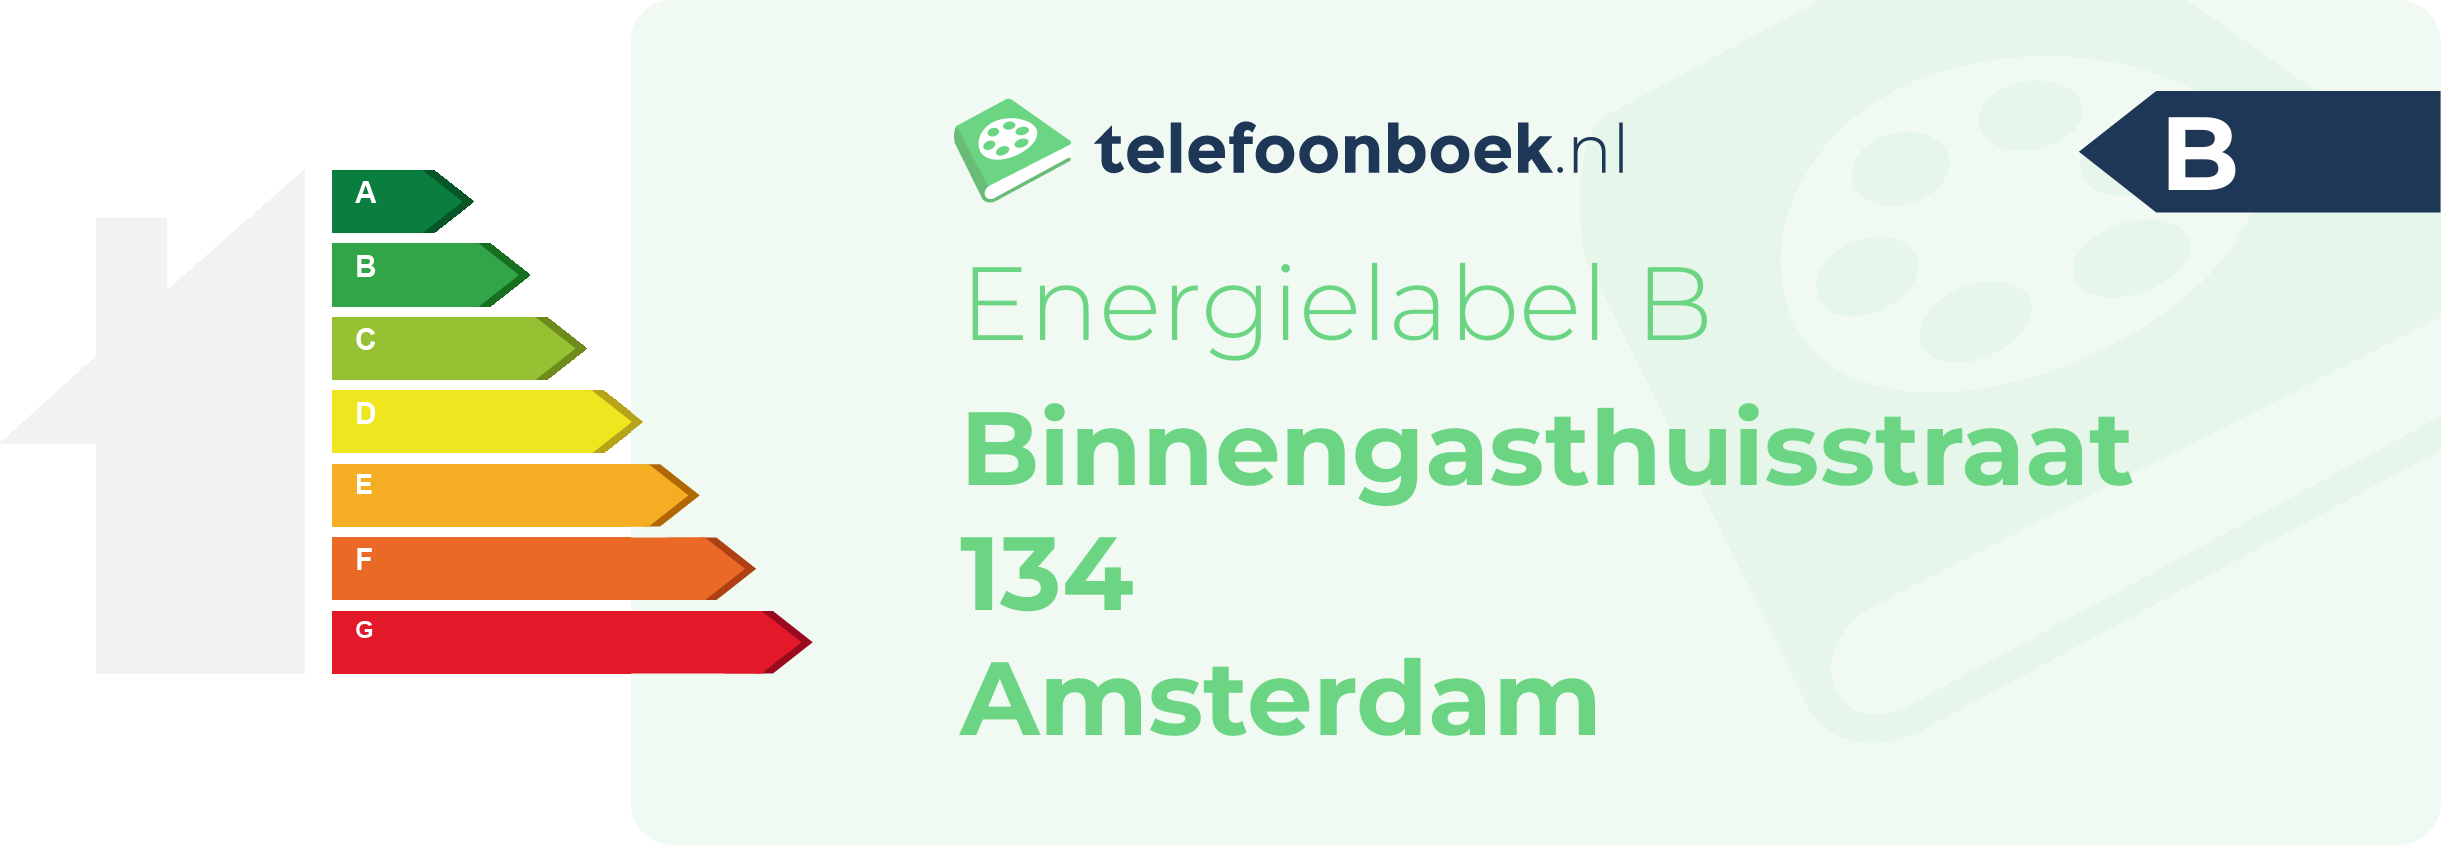 Energielabel Binnengasthuisstraat 134 Amsterdam